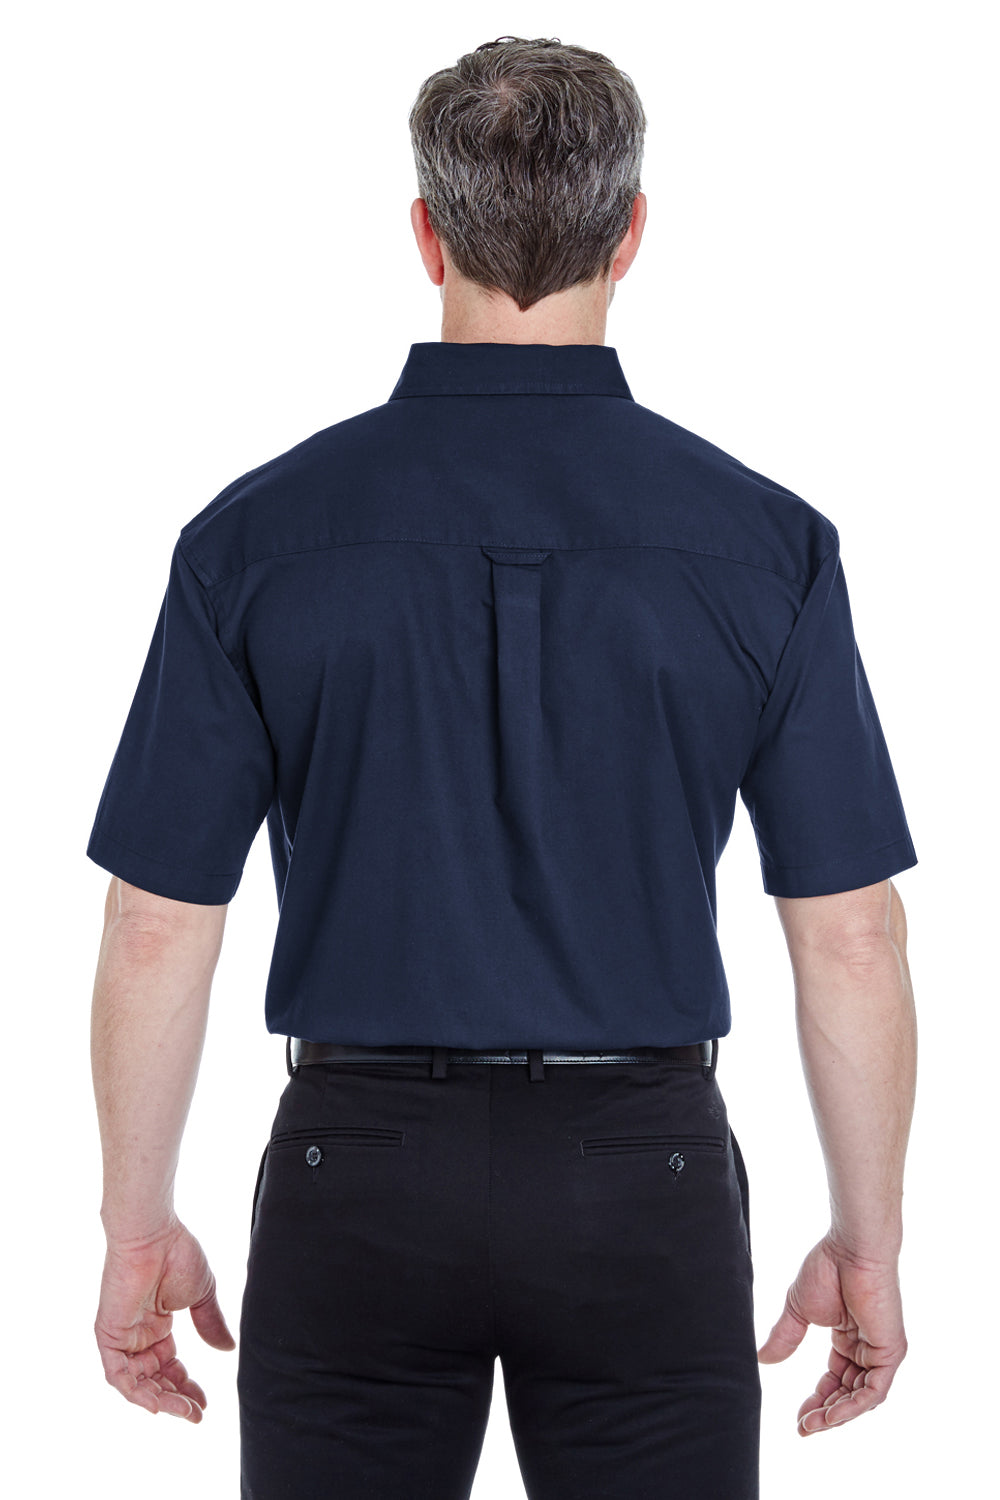 UltraClub 8977 Mens Whisper Short Sleeve Button Down Shirt w/ Pocket Navy Blue Back